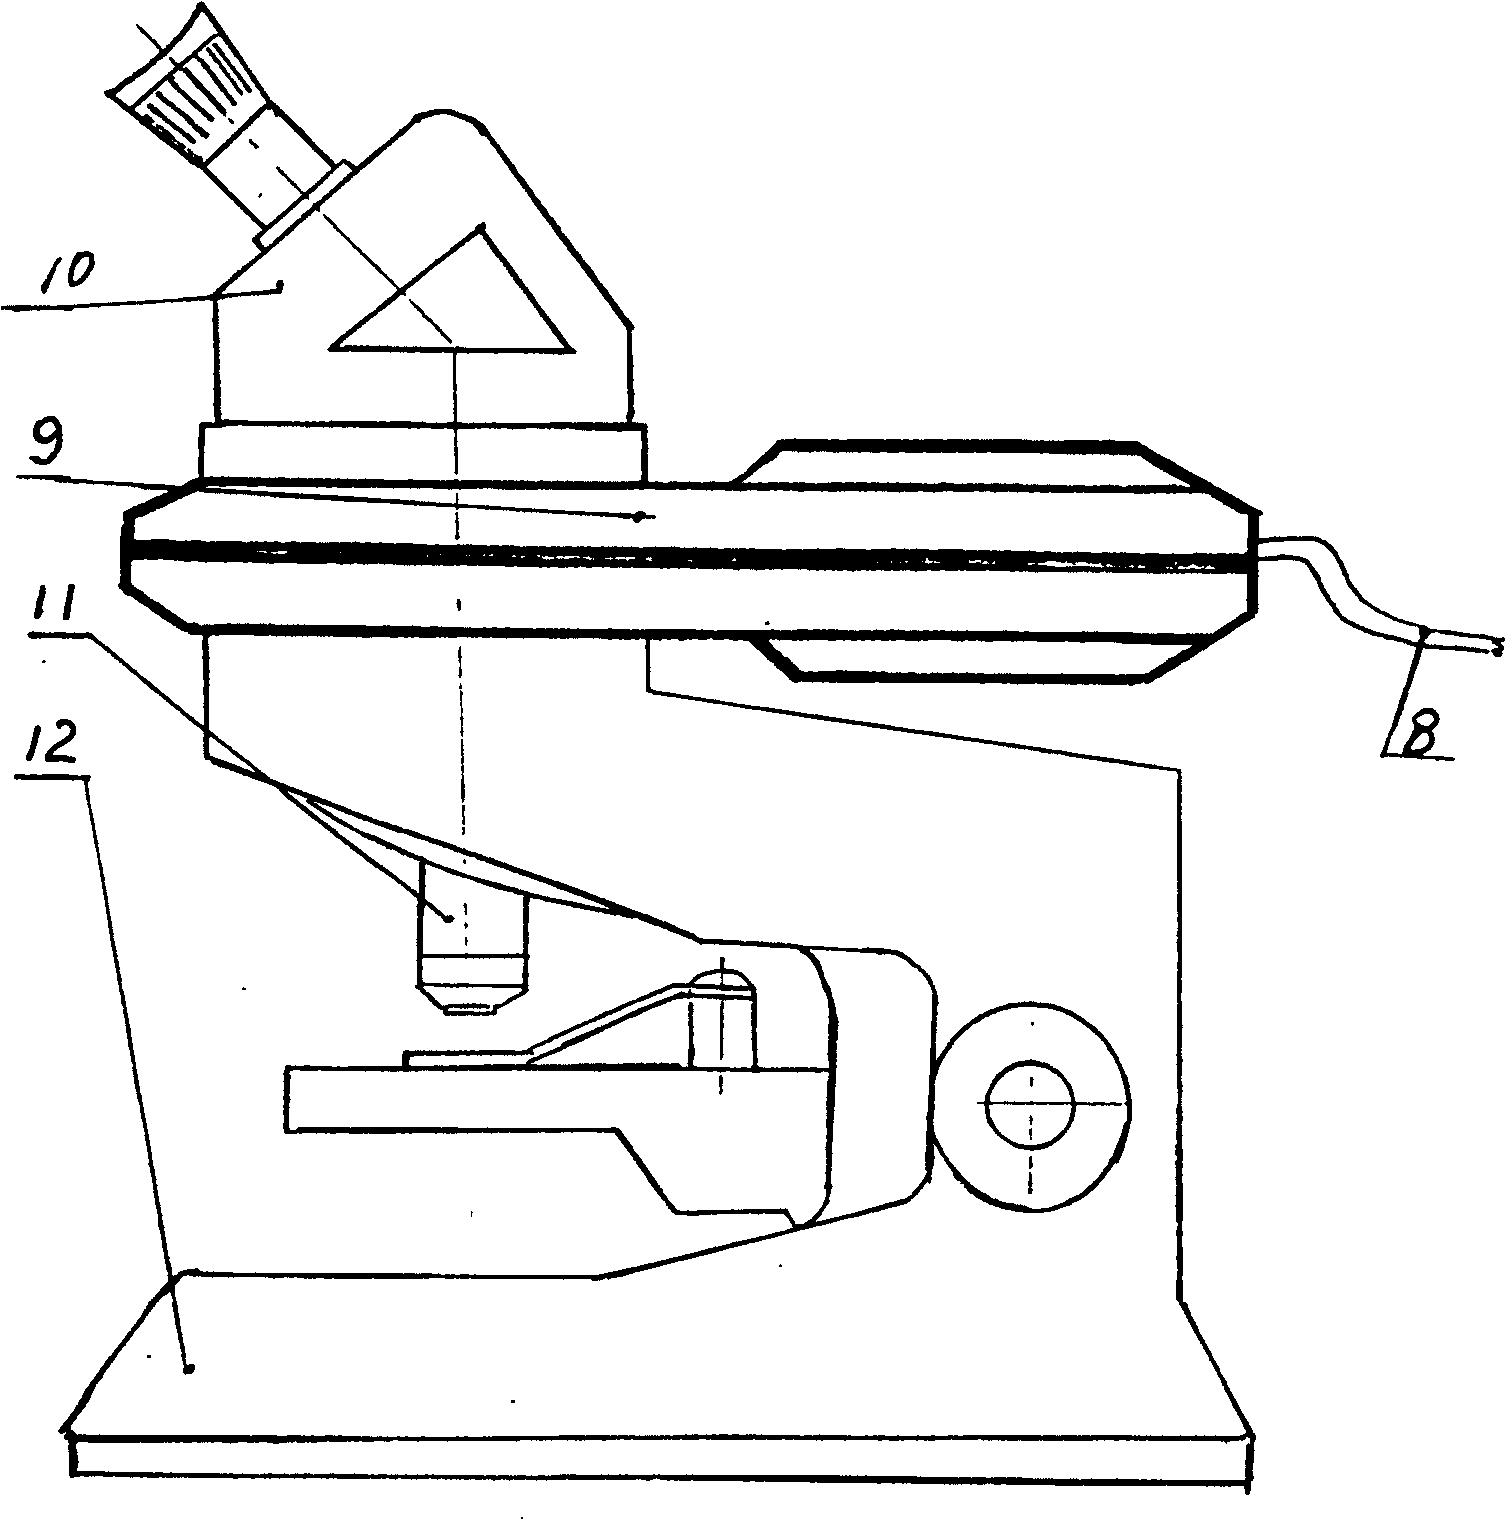 Embedded type microscopy digital camera